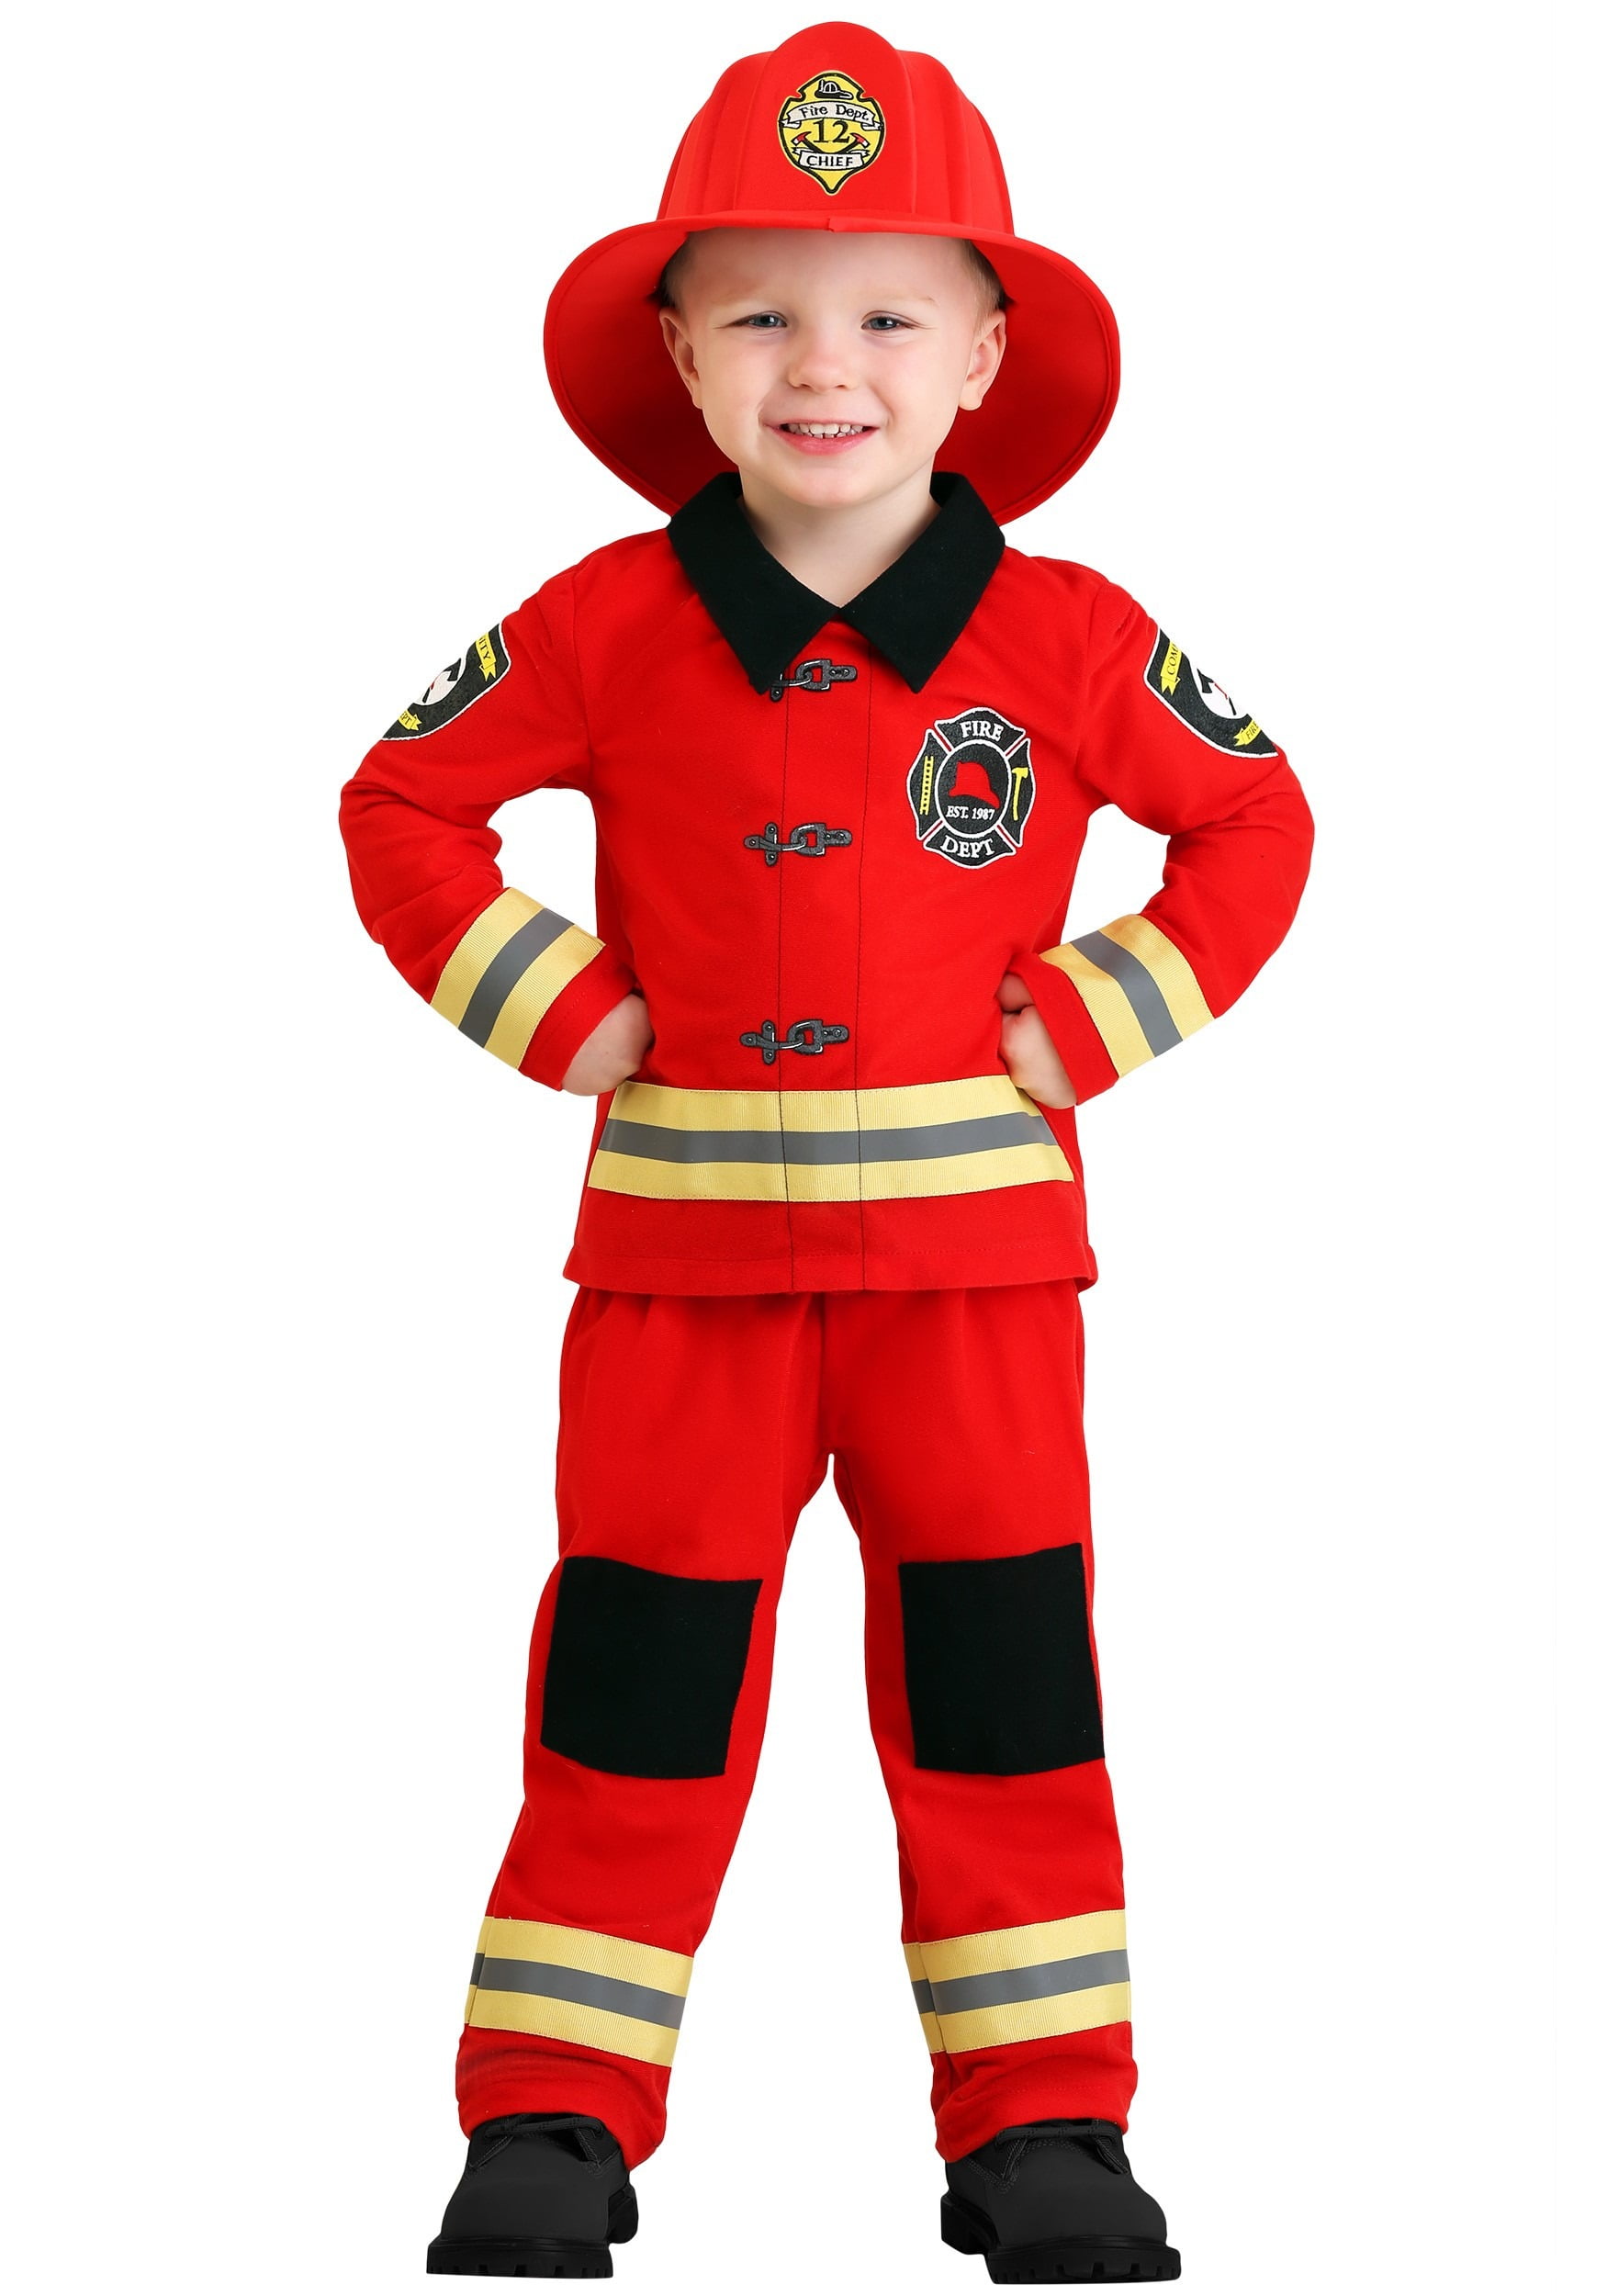 Child Fireman Costume Kids Firefighter Costumes - Bank2home.com